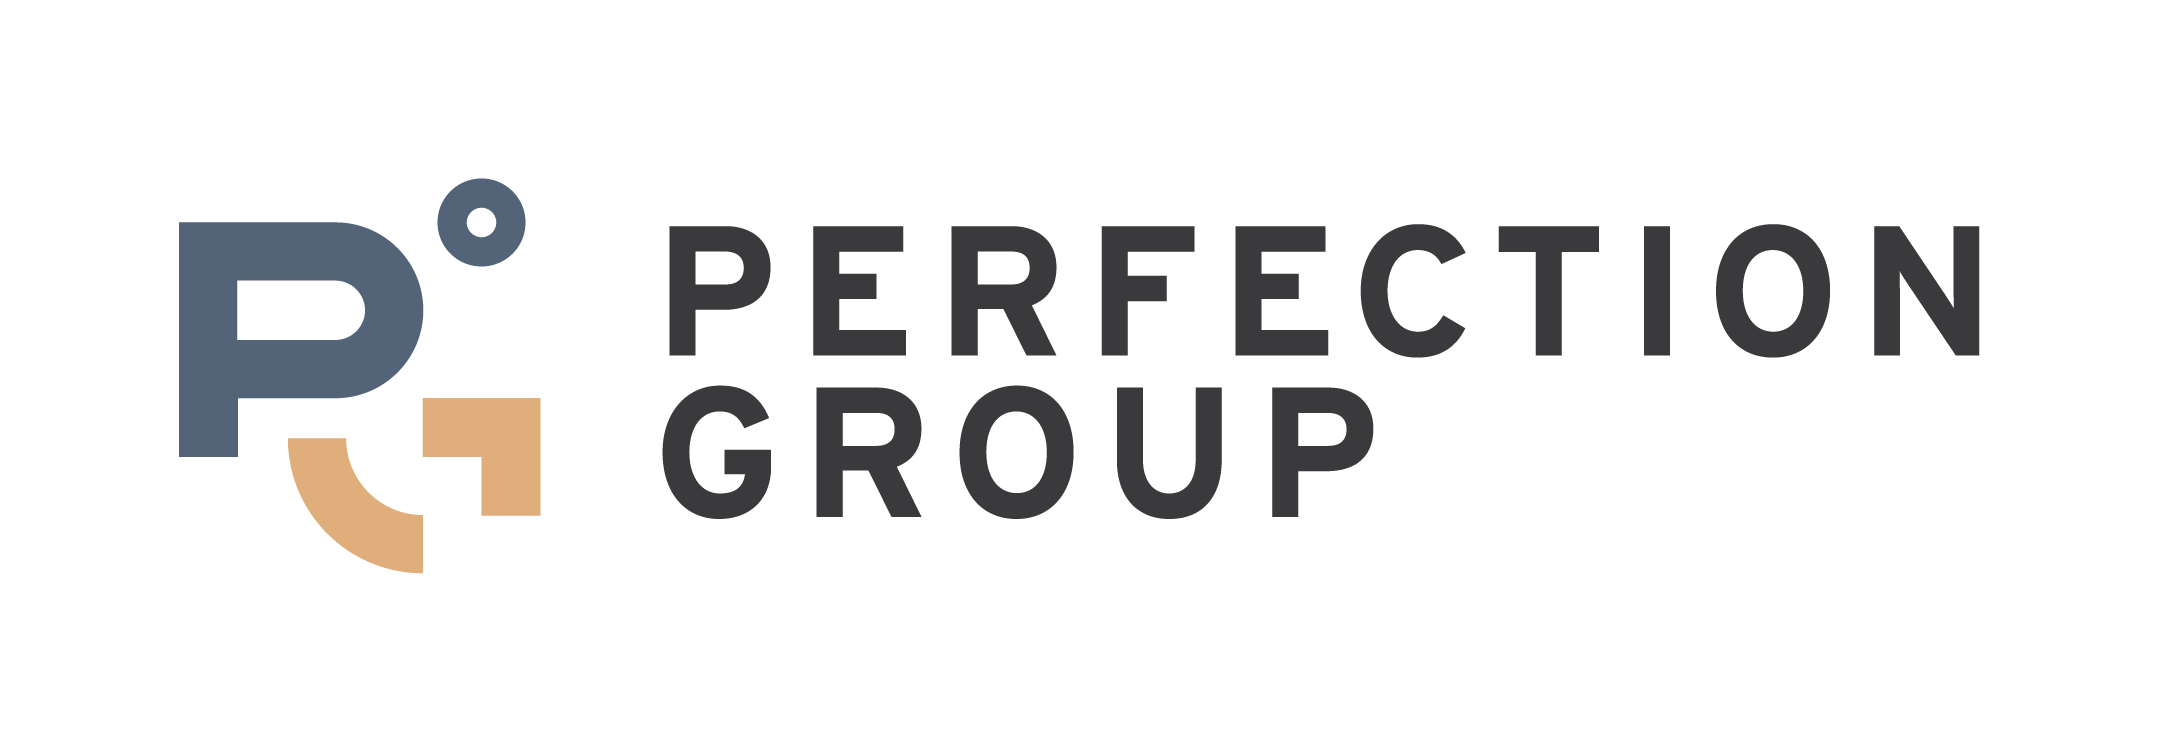 Perfection Group Company Logo